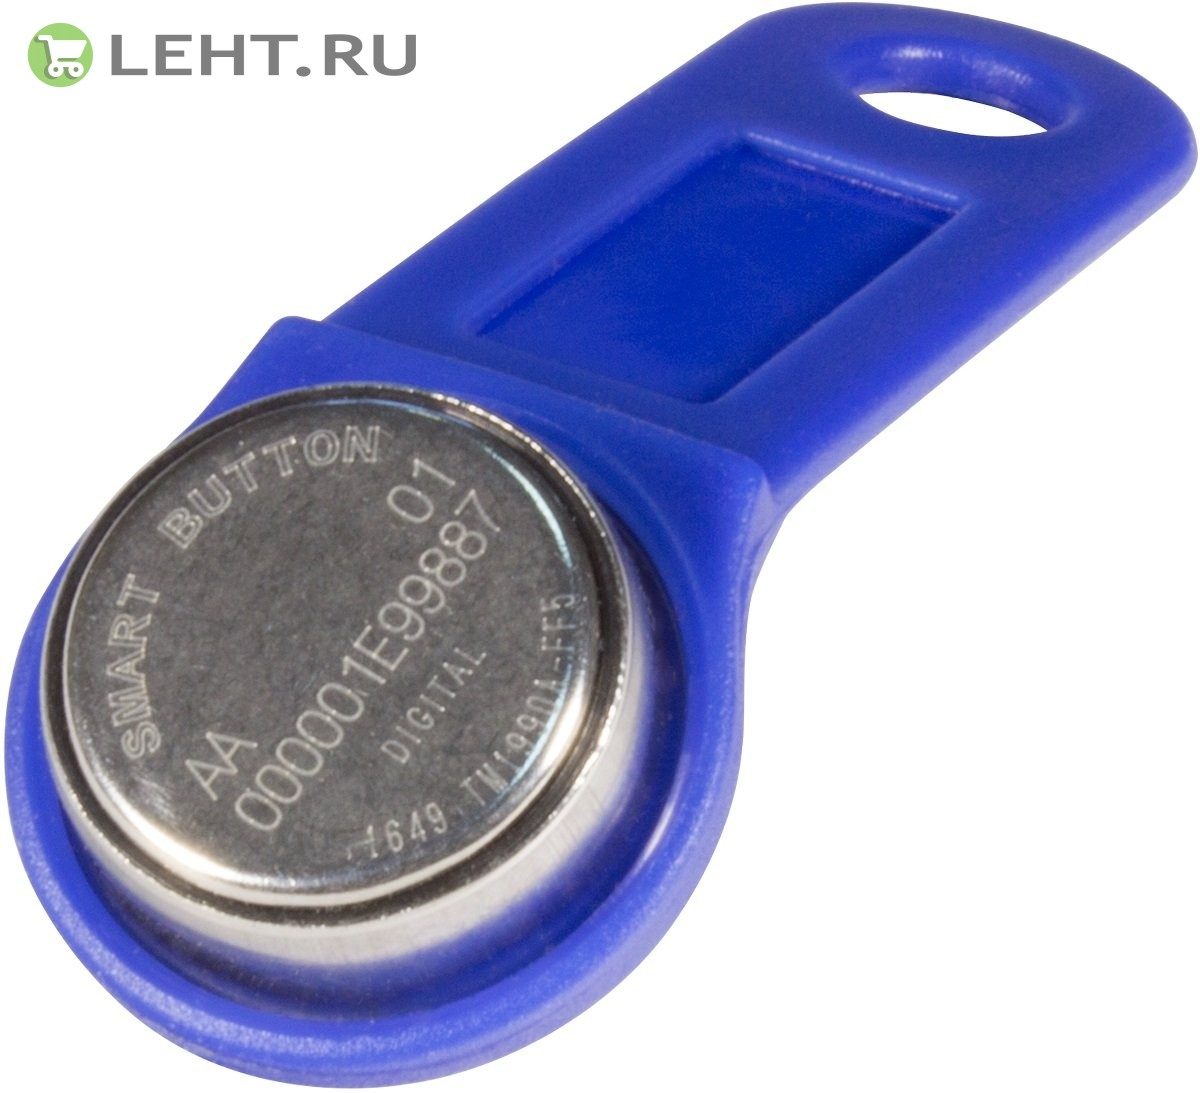 Ключ SB 1990 A TouchMemory (синий): Ключ электронный Touch Memory с держателем